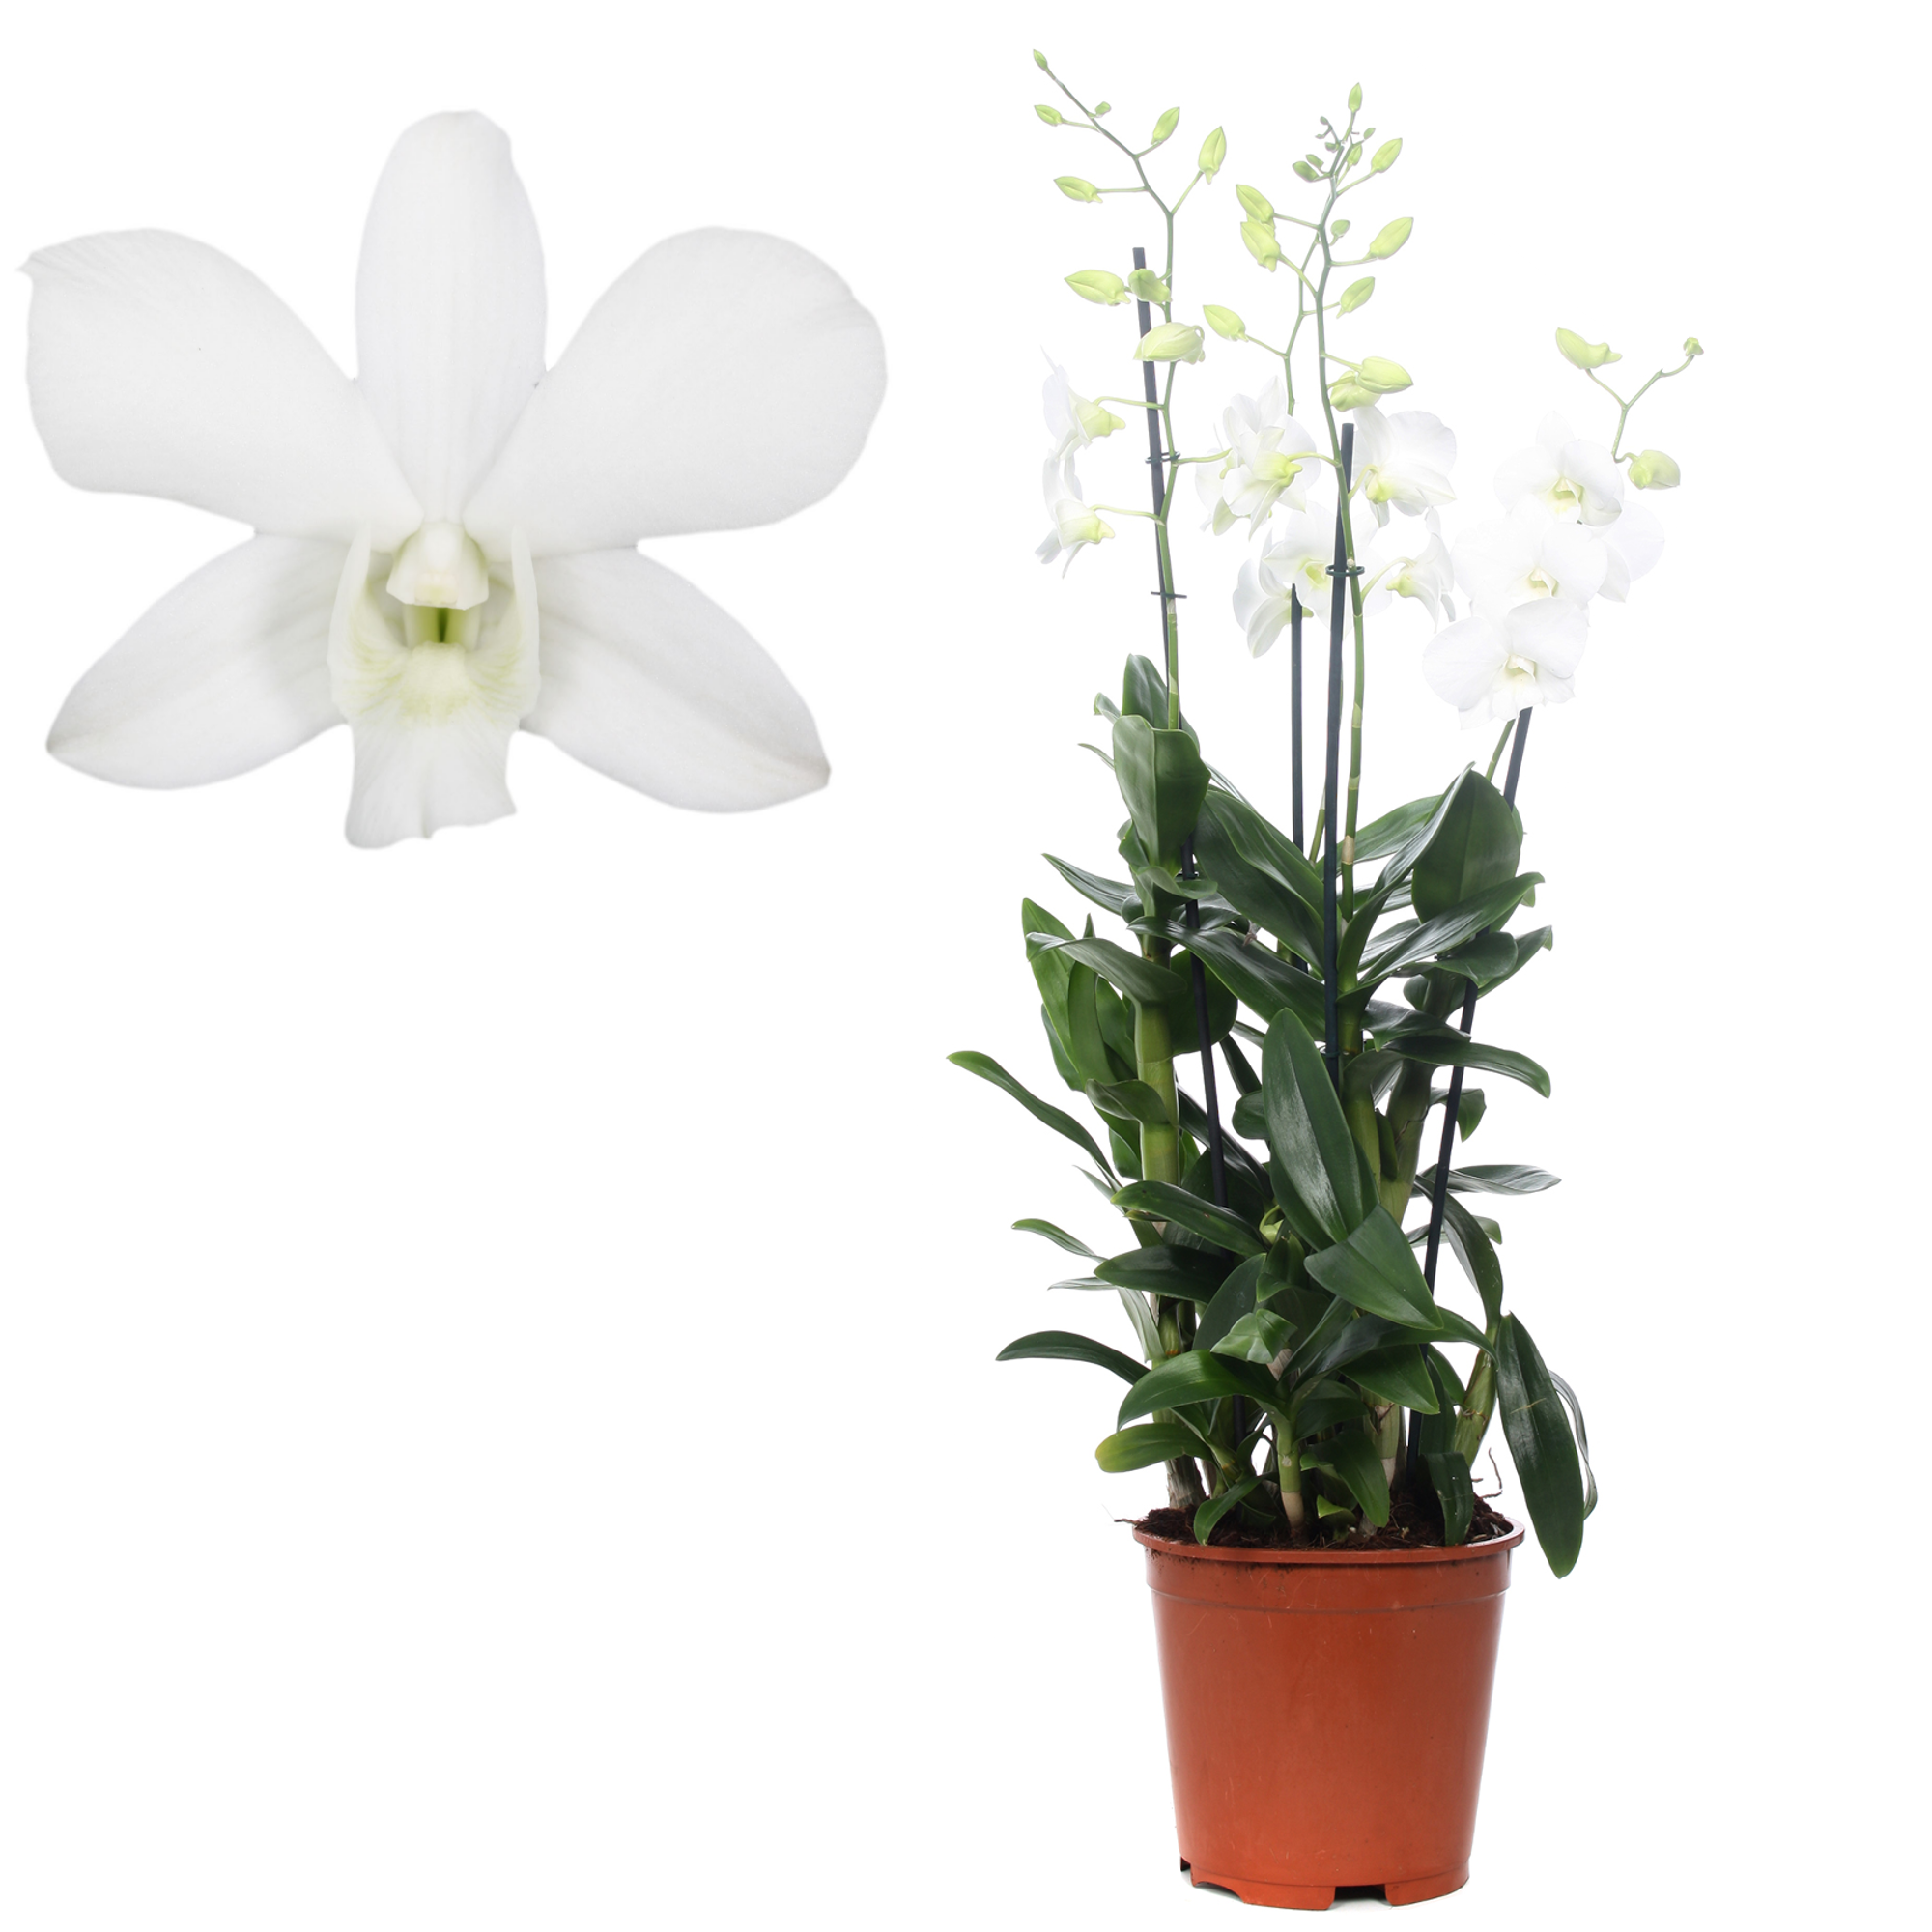 Dendrobium-Orchidee 4 Rispen weiß, 21 cm Topf + product picture